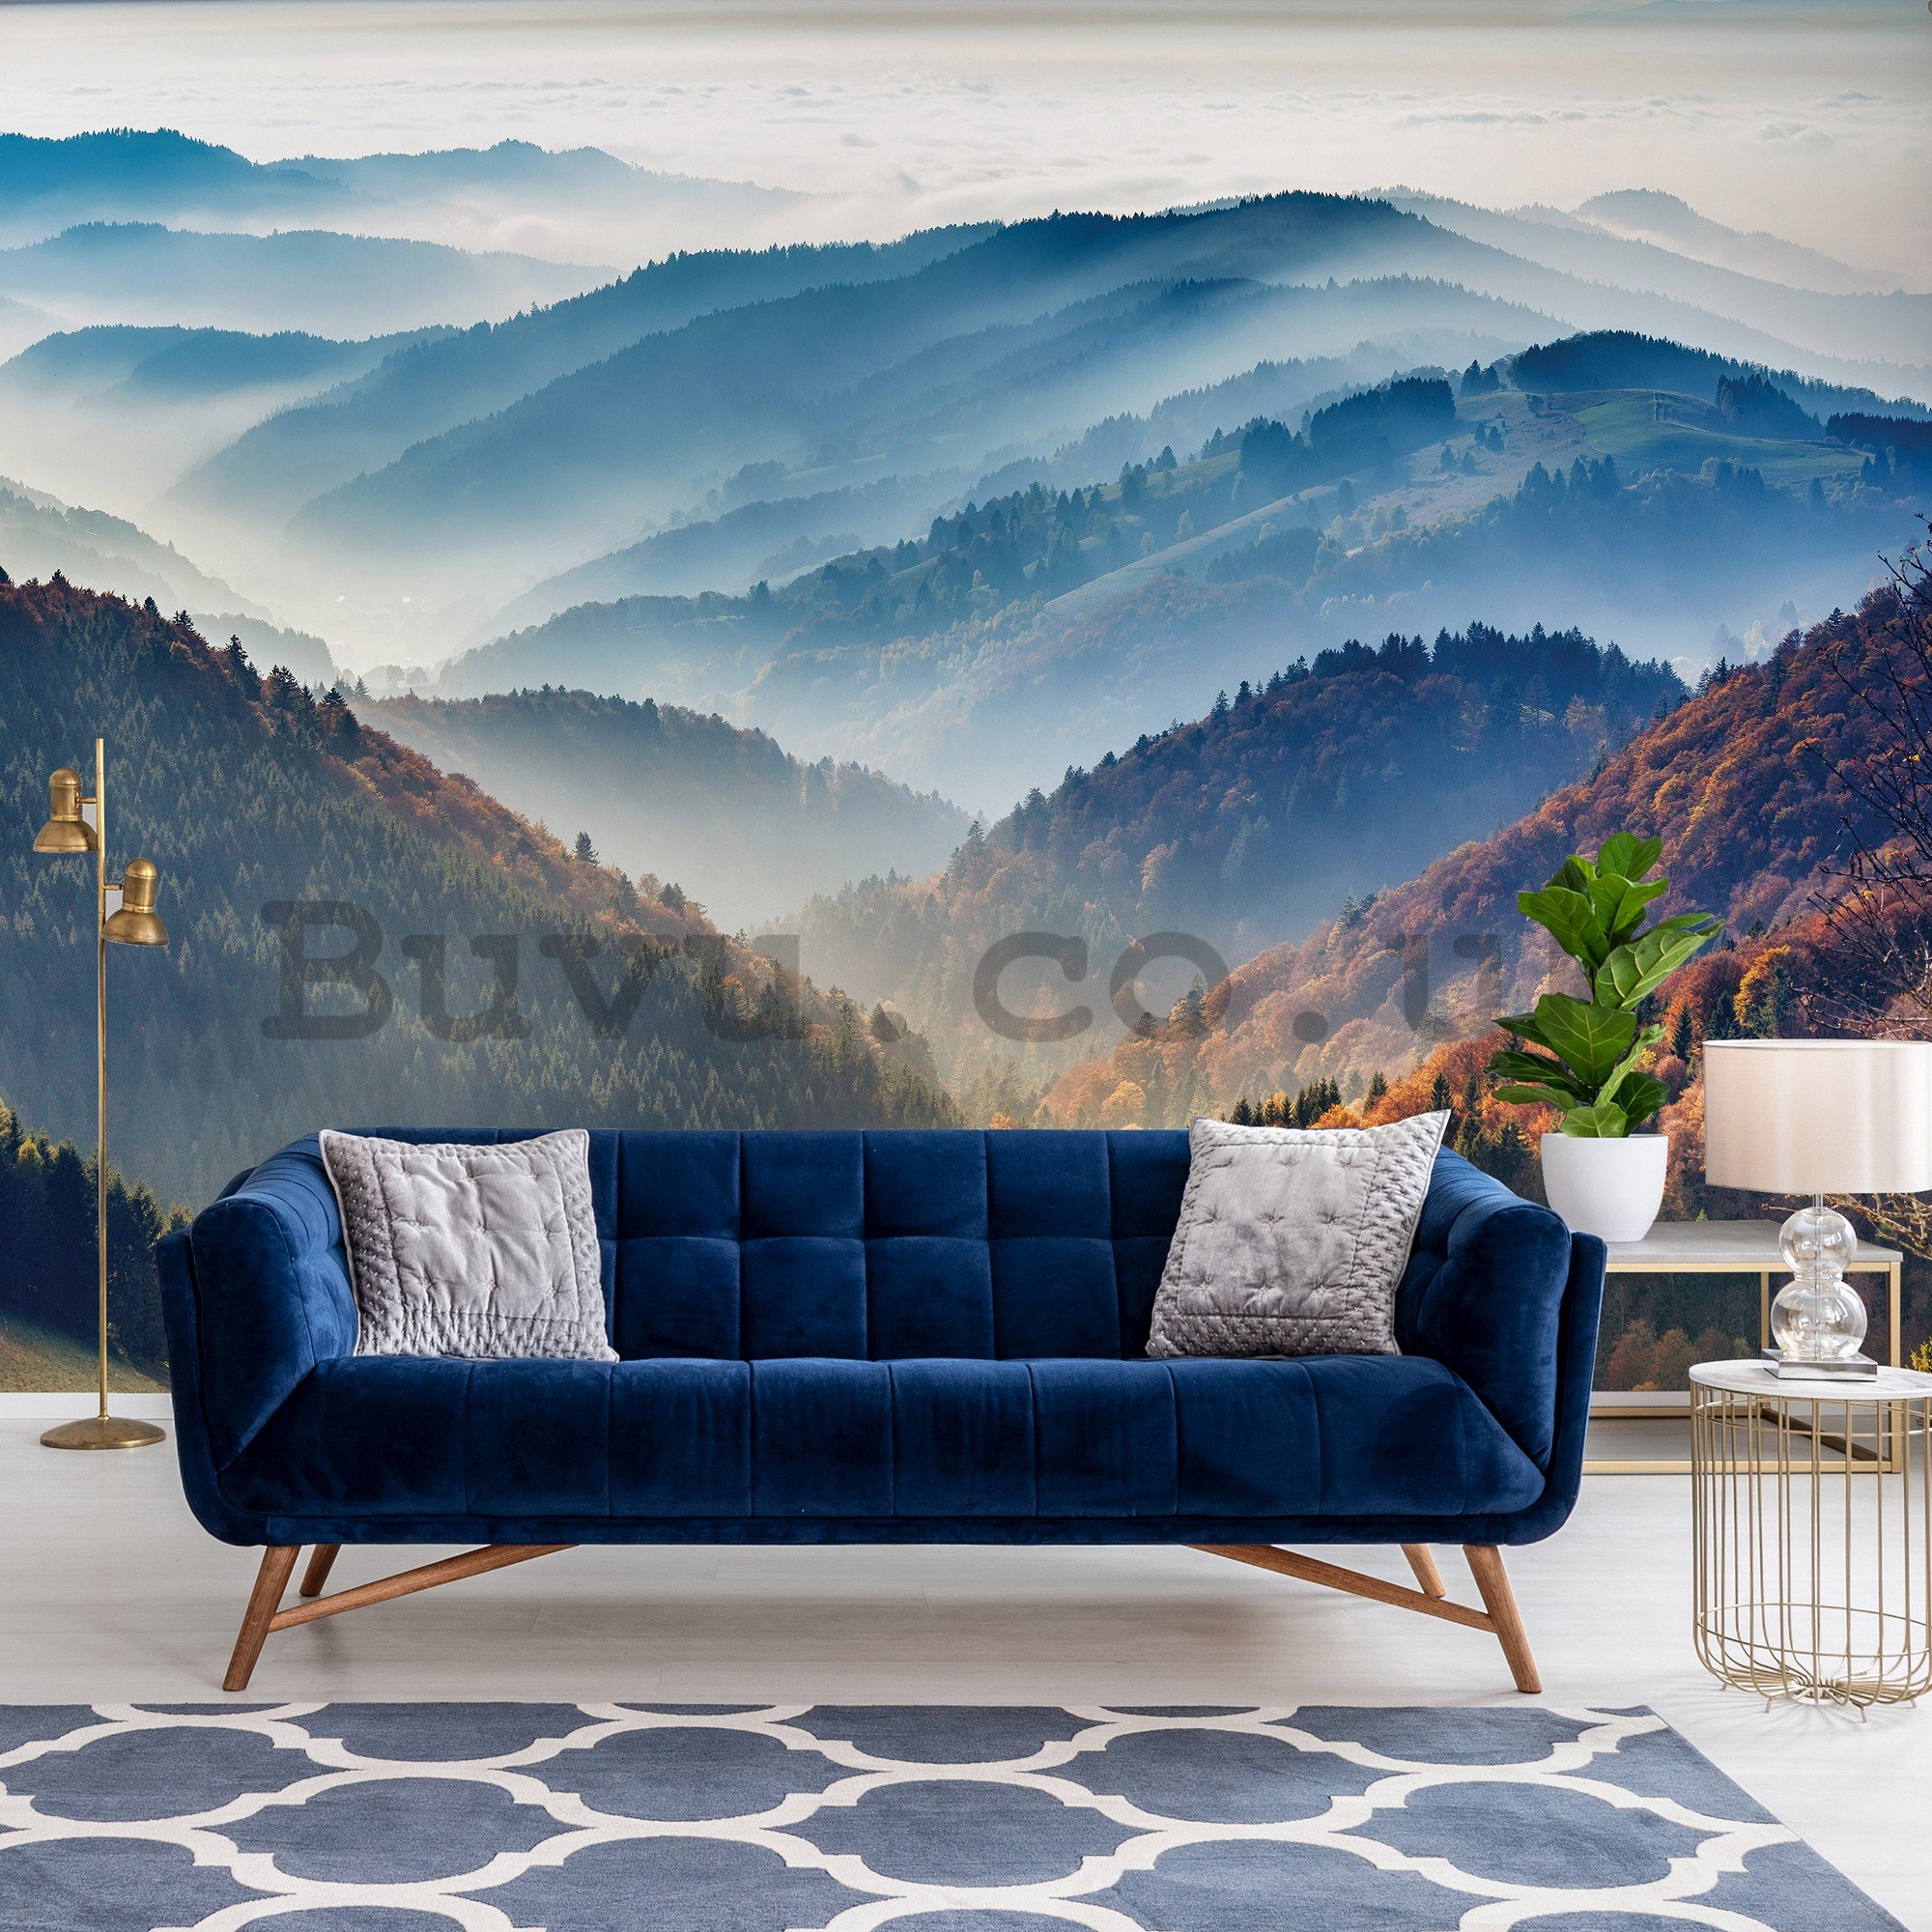 Wall mural vlies: Mountain landscape - 416x254 cm